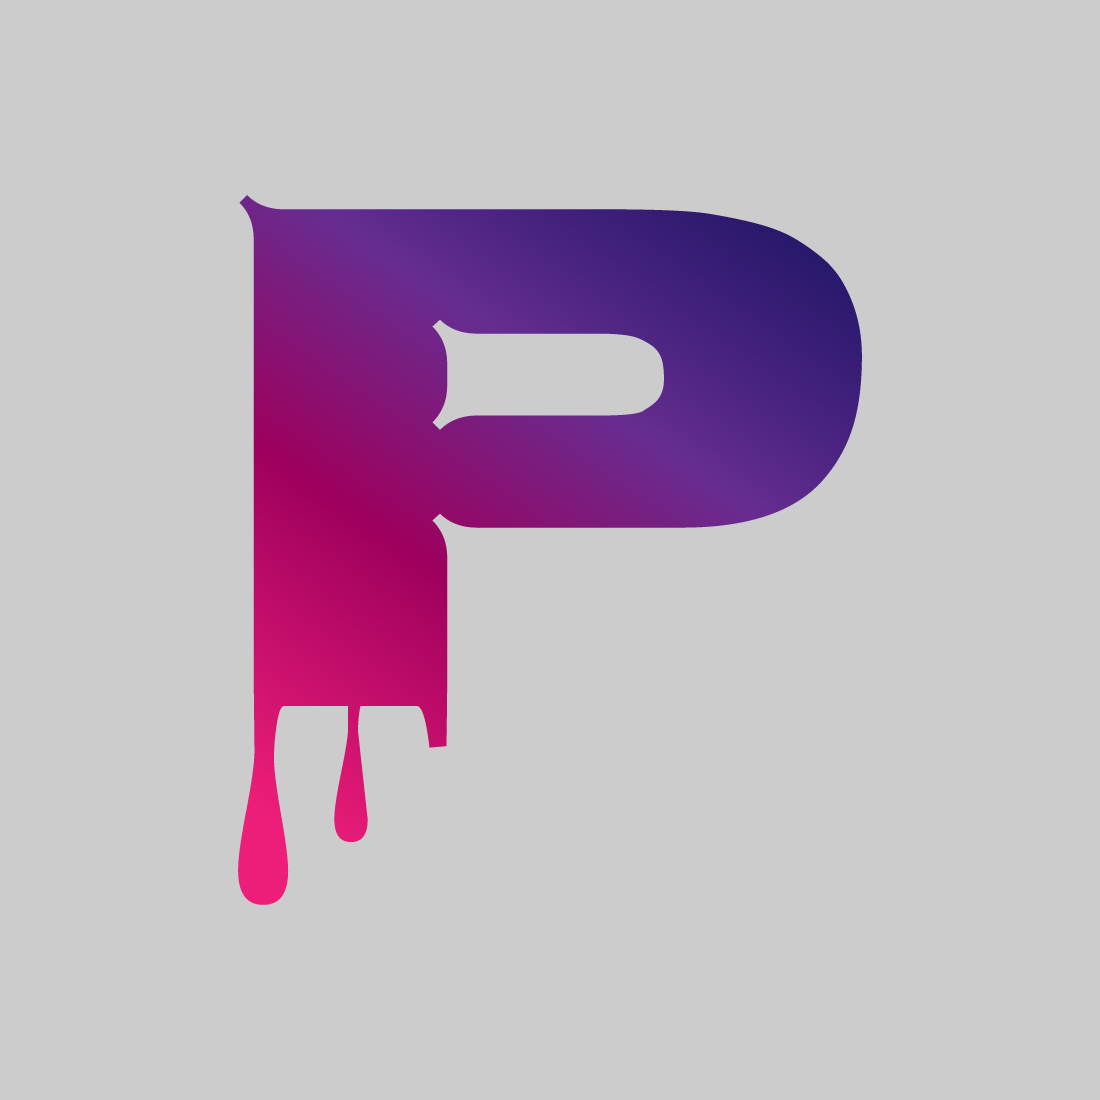 P logo cover image.